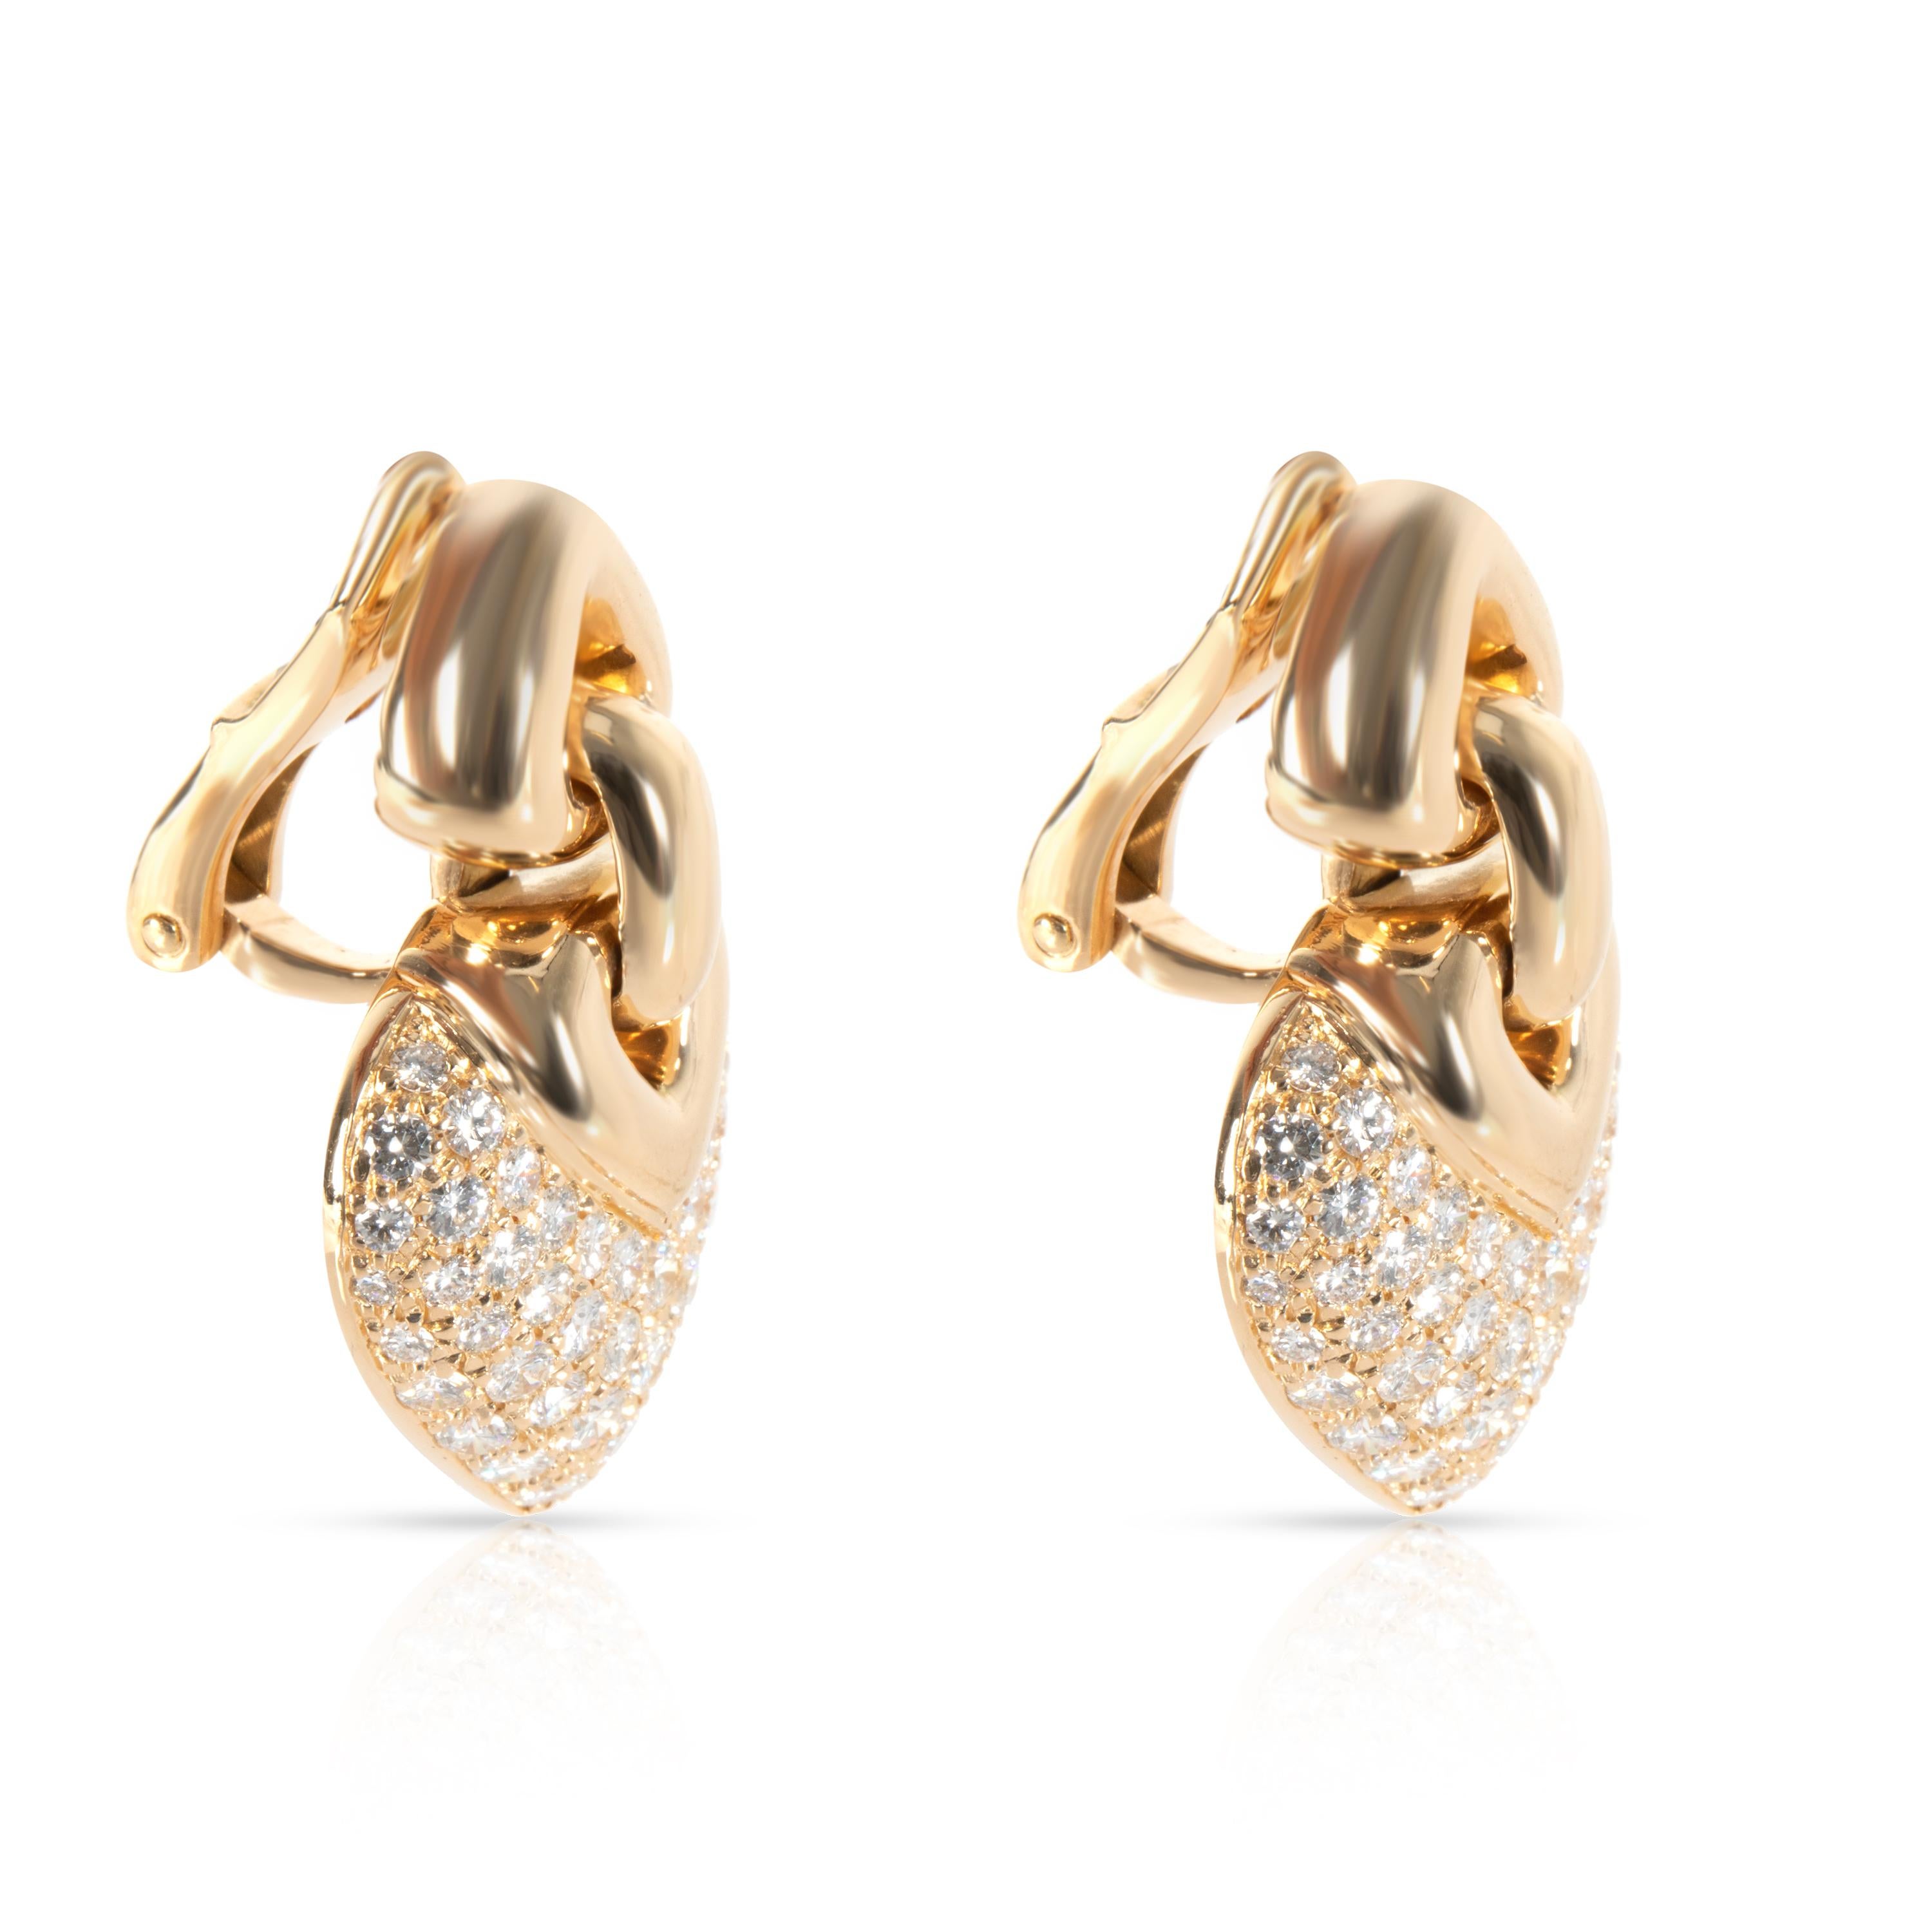 Round Cut Bulgari Doppio Cuore Diamond Earrings in 18 Karat Yellow Gold 3.00 Carat